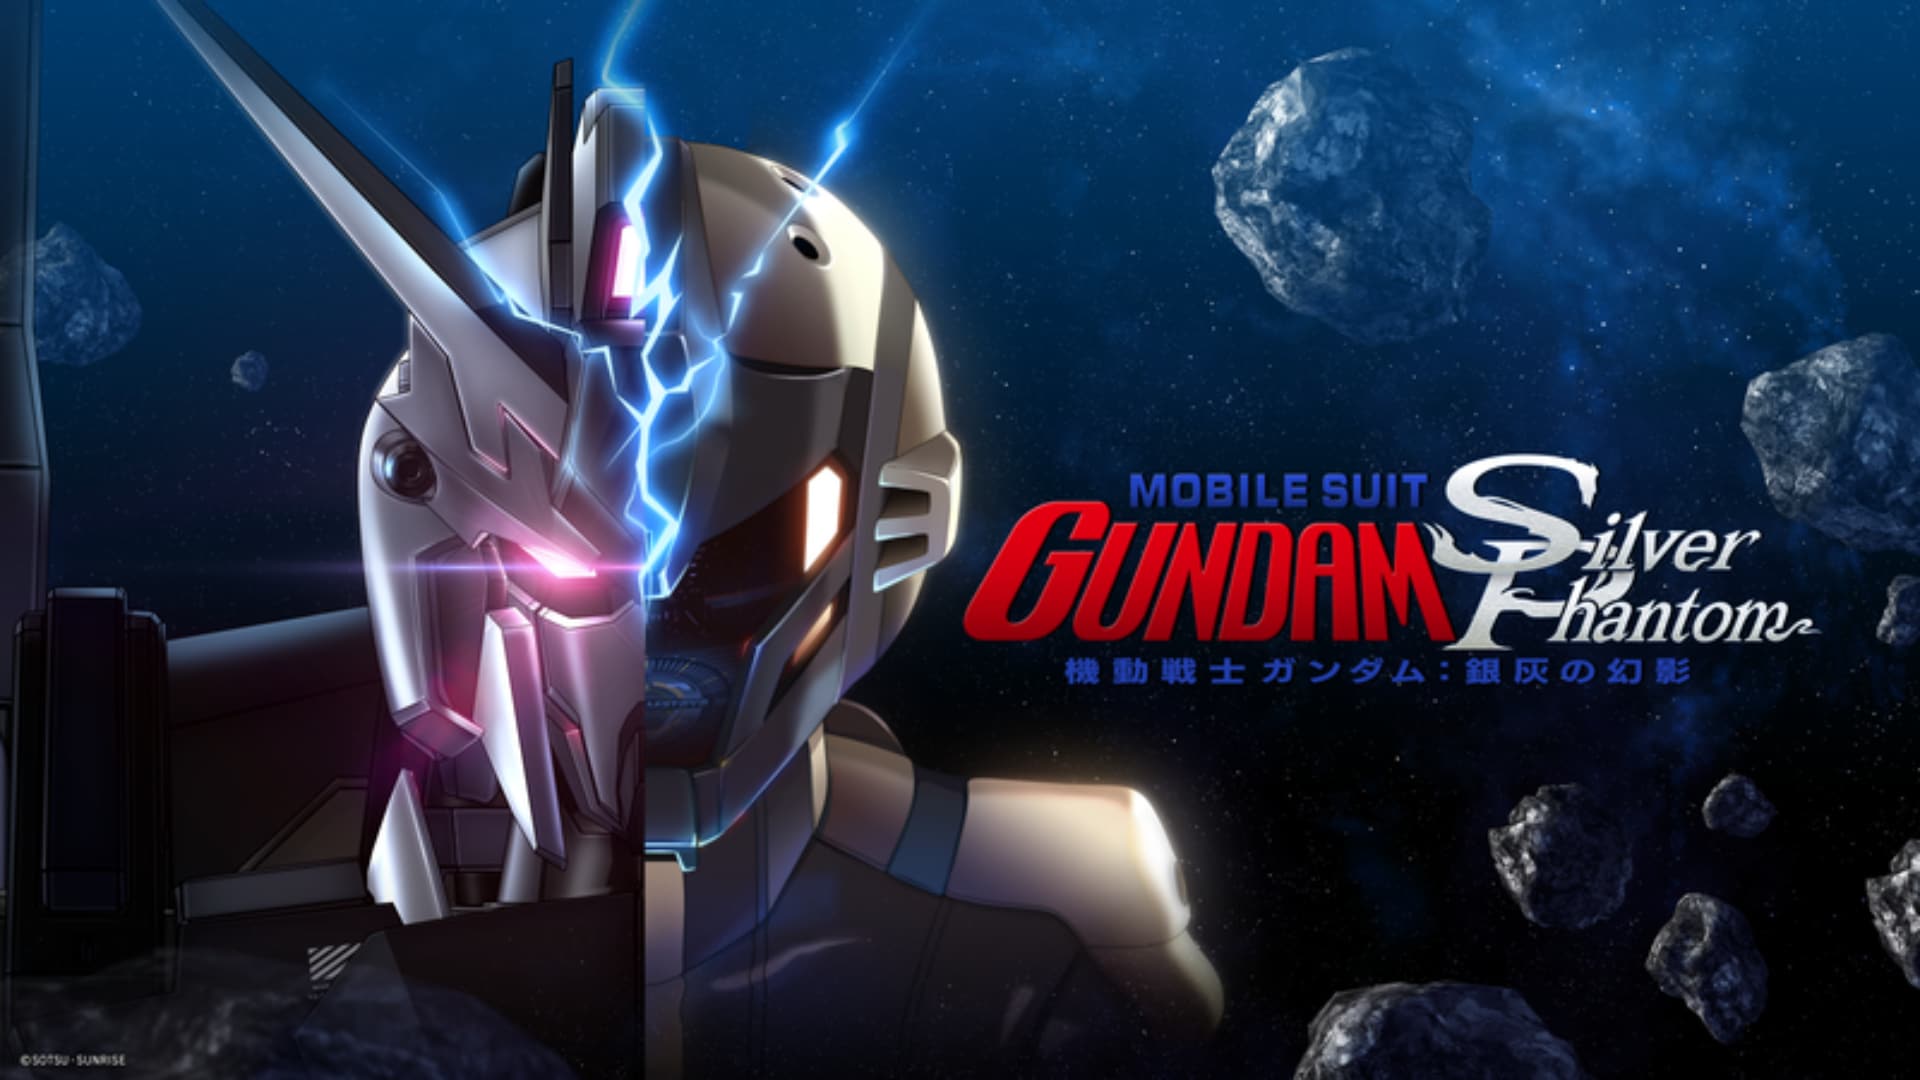 Mobile Suit Gundam Plata Fantasma